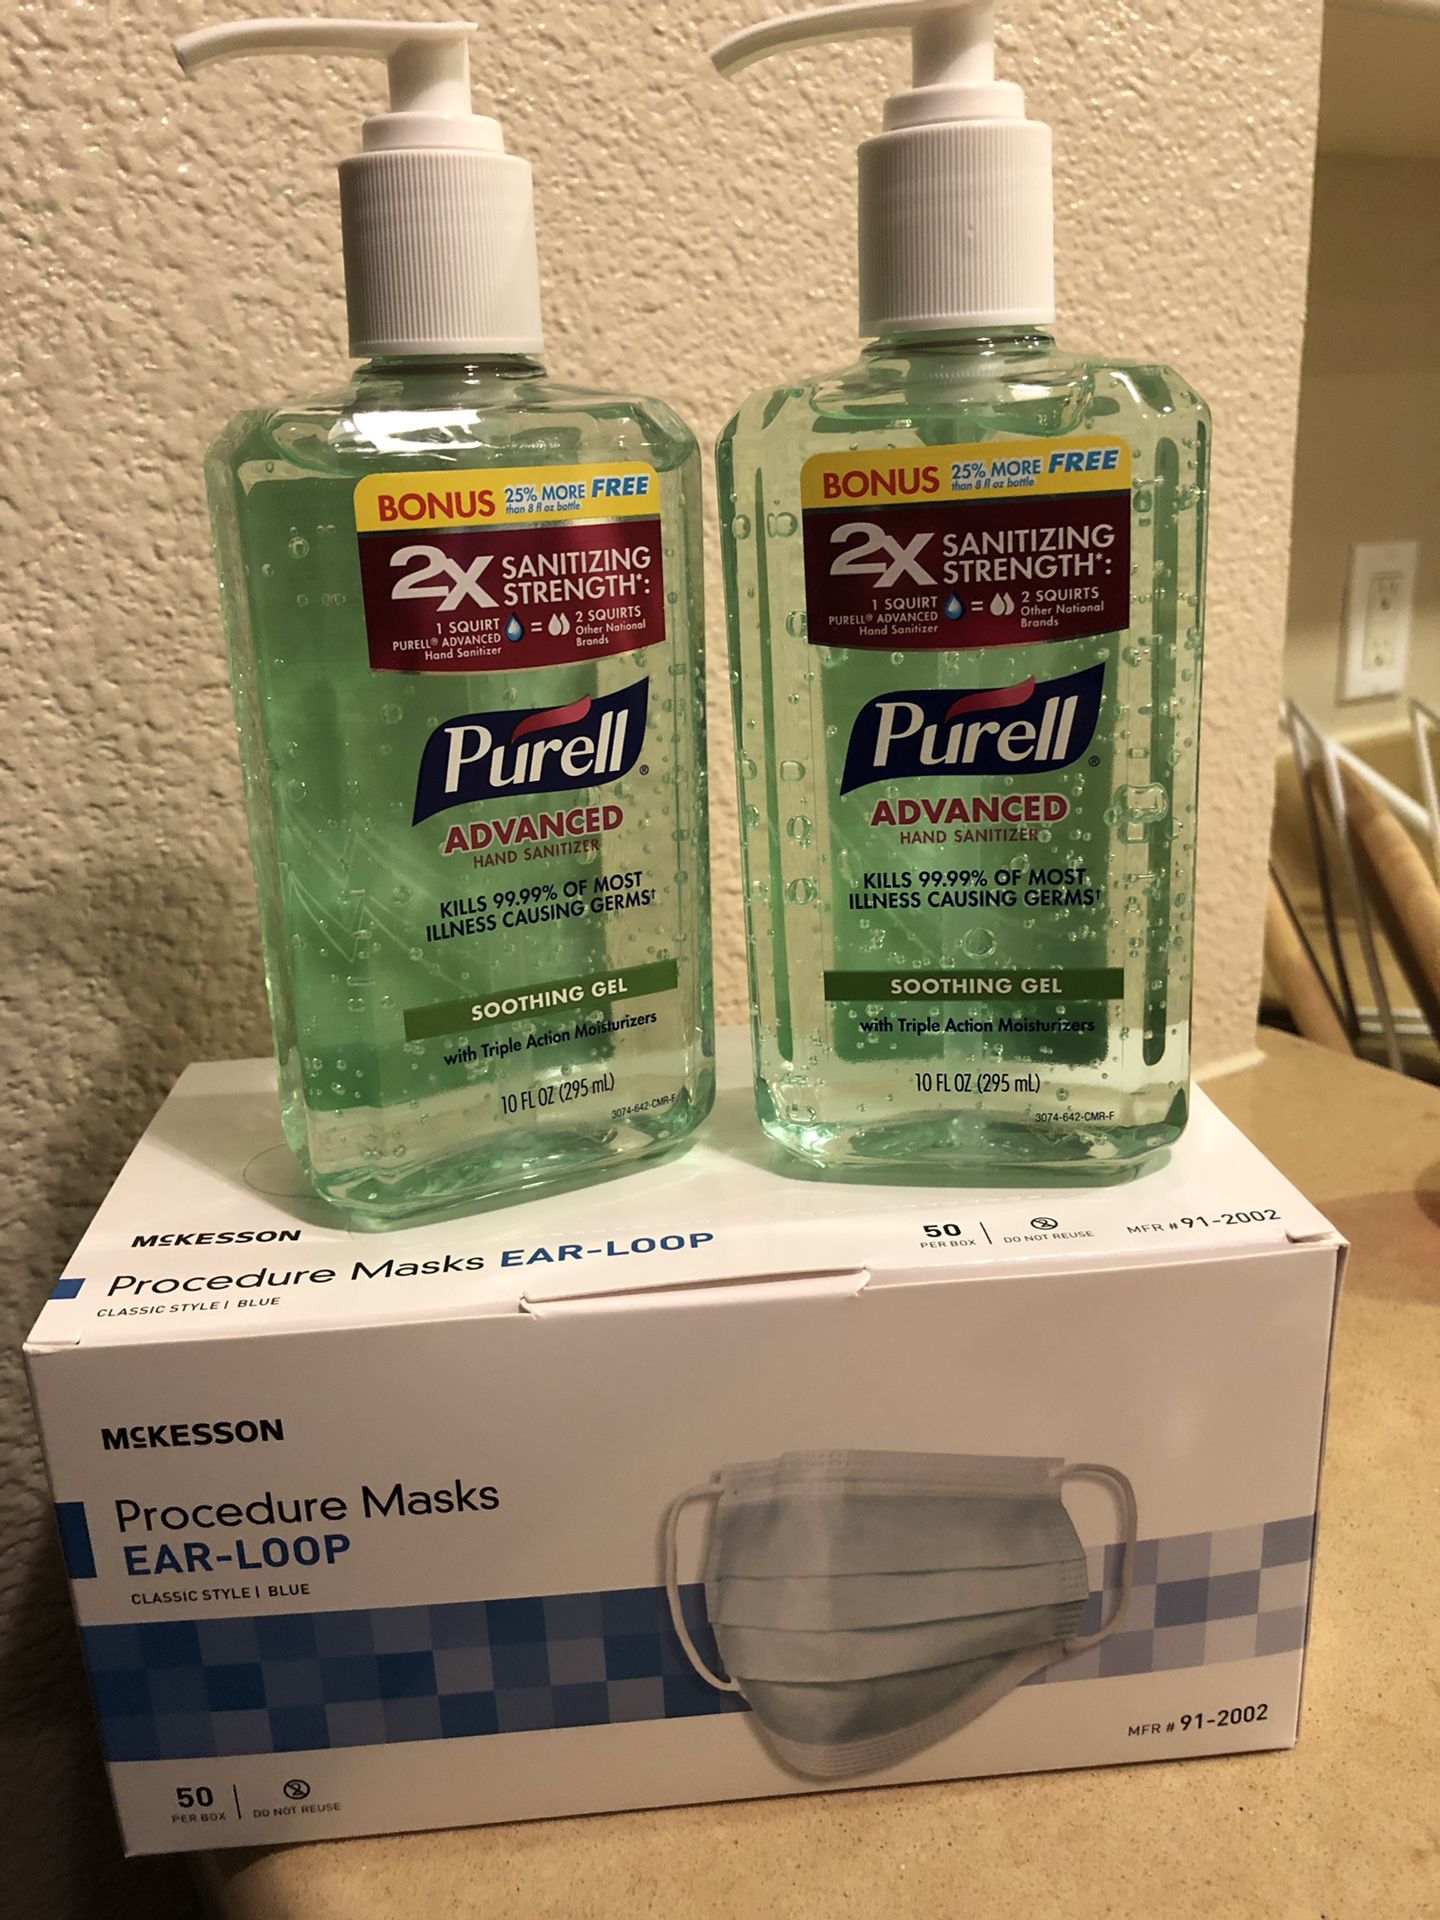 Face masks (box of 50) and hand sanitizer - Whuhan virus survival kit